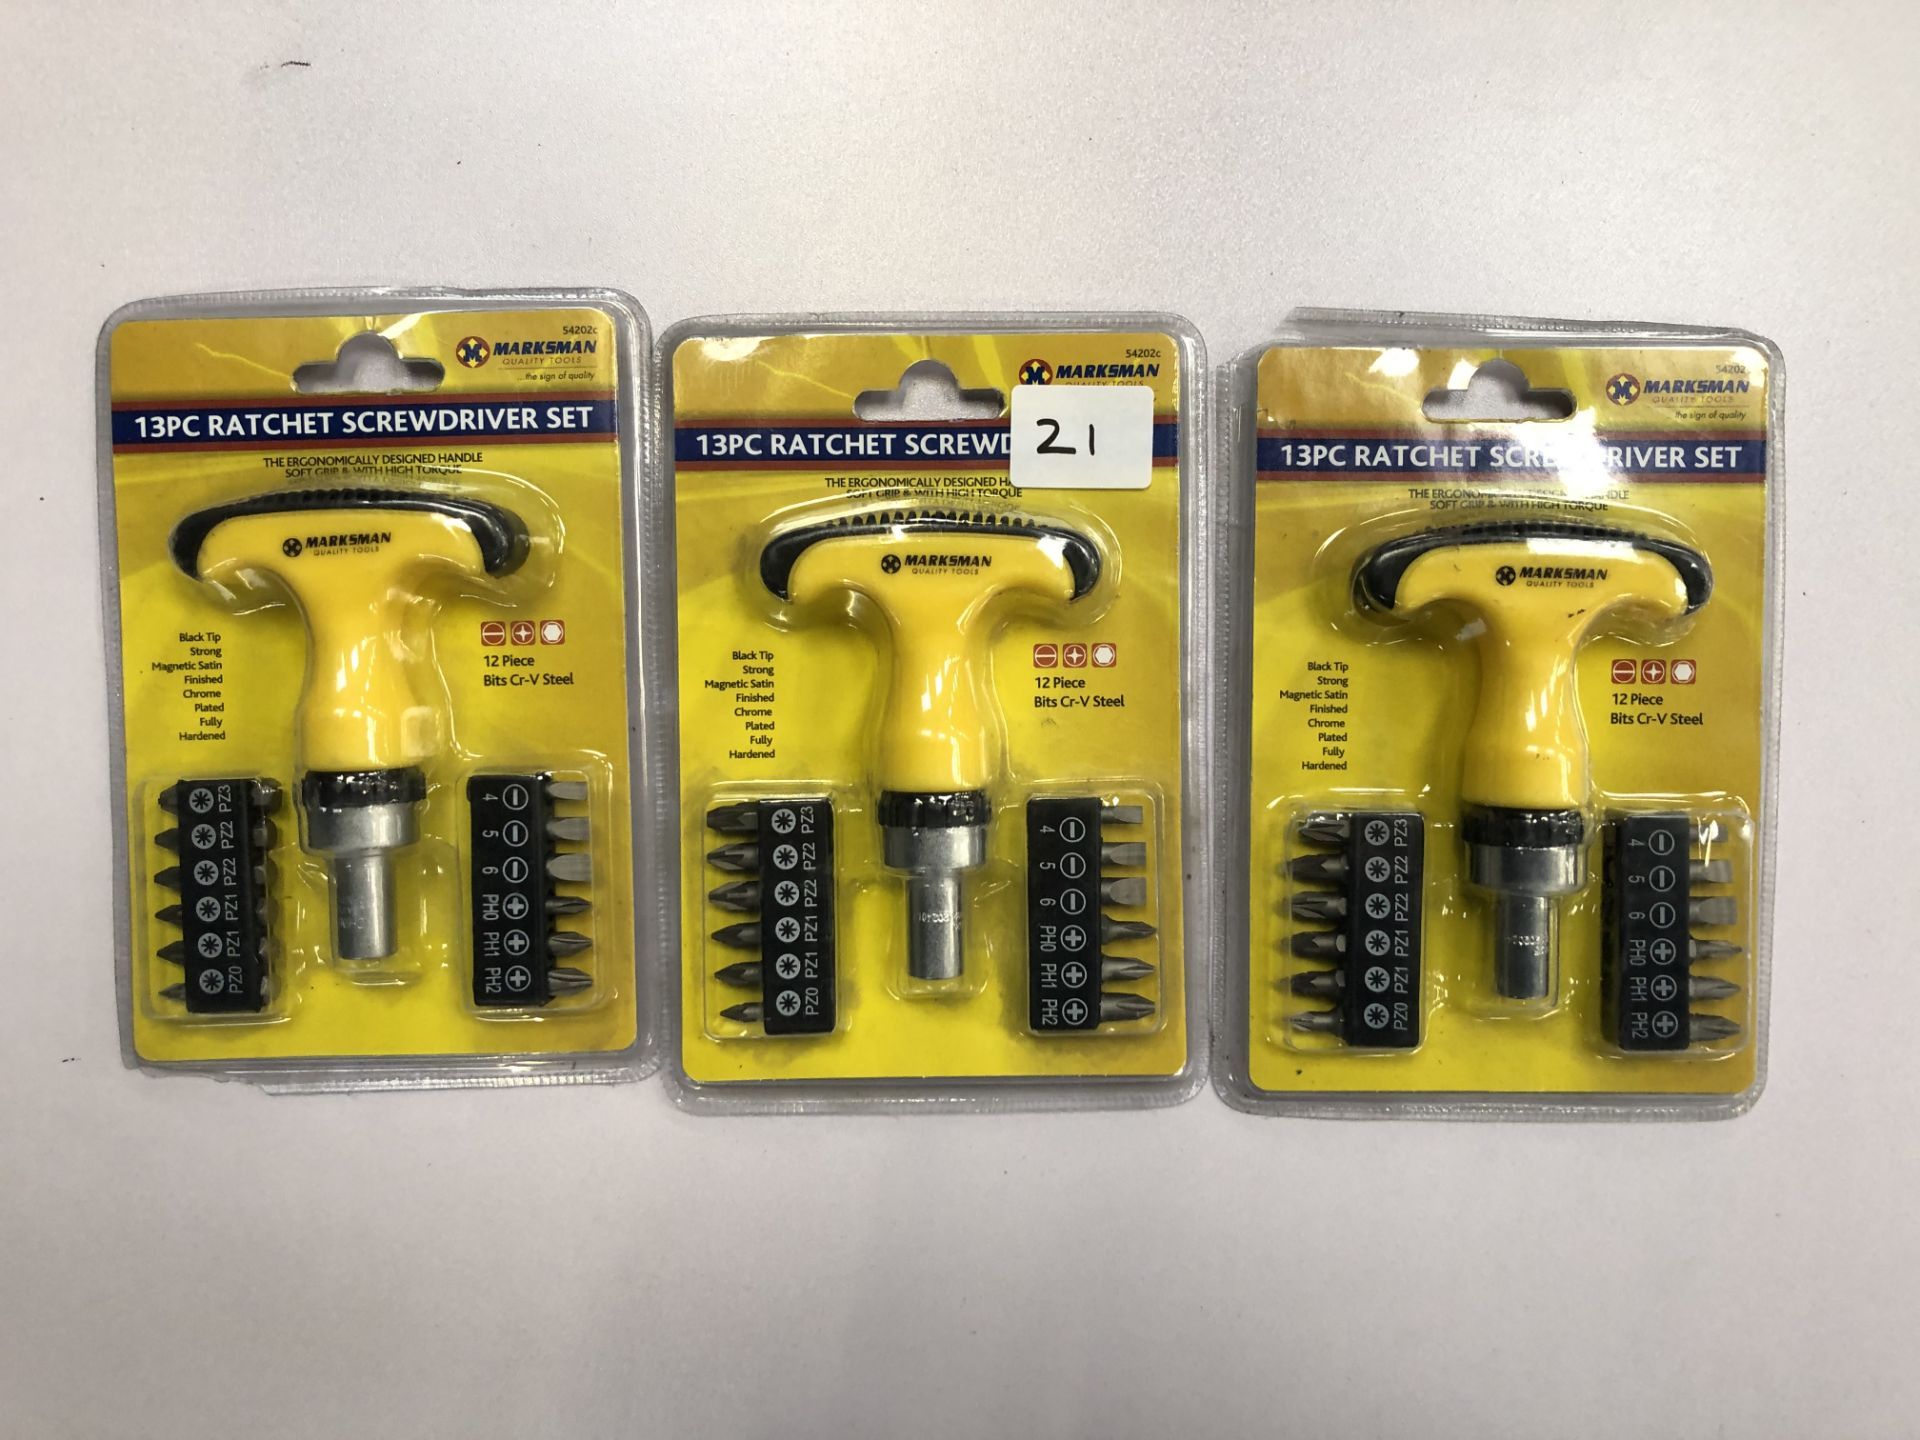 x 3 13pc Ratchet screwdriver sets